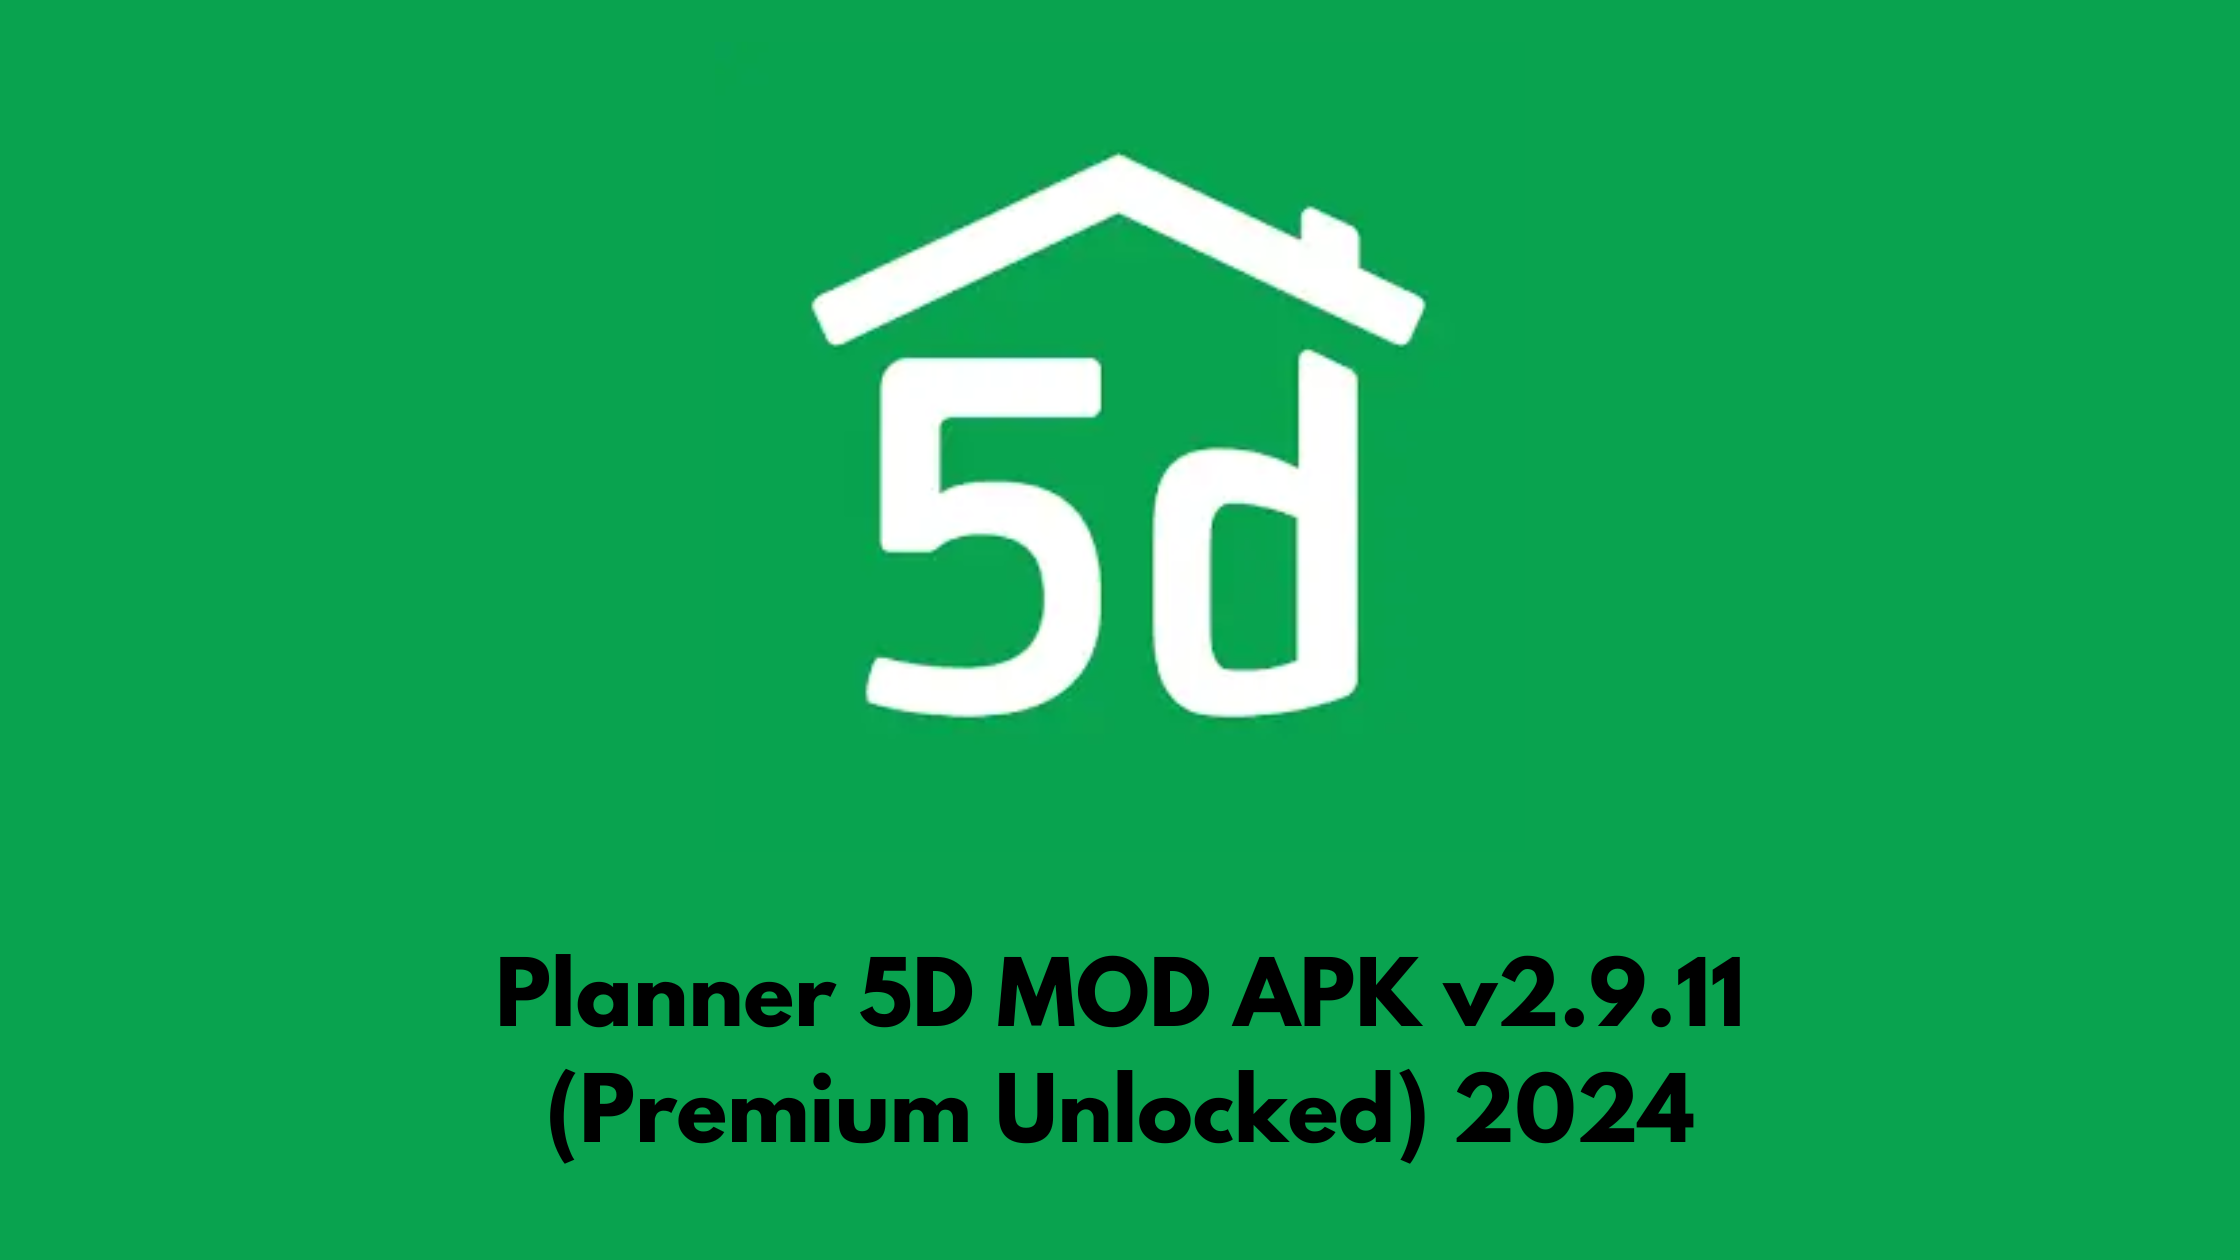 Planner 5D MOD APK v2.9.11 (Premium Unlocked) 2024,